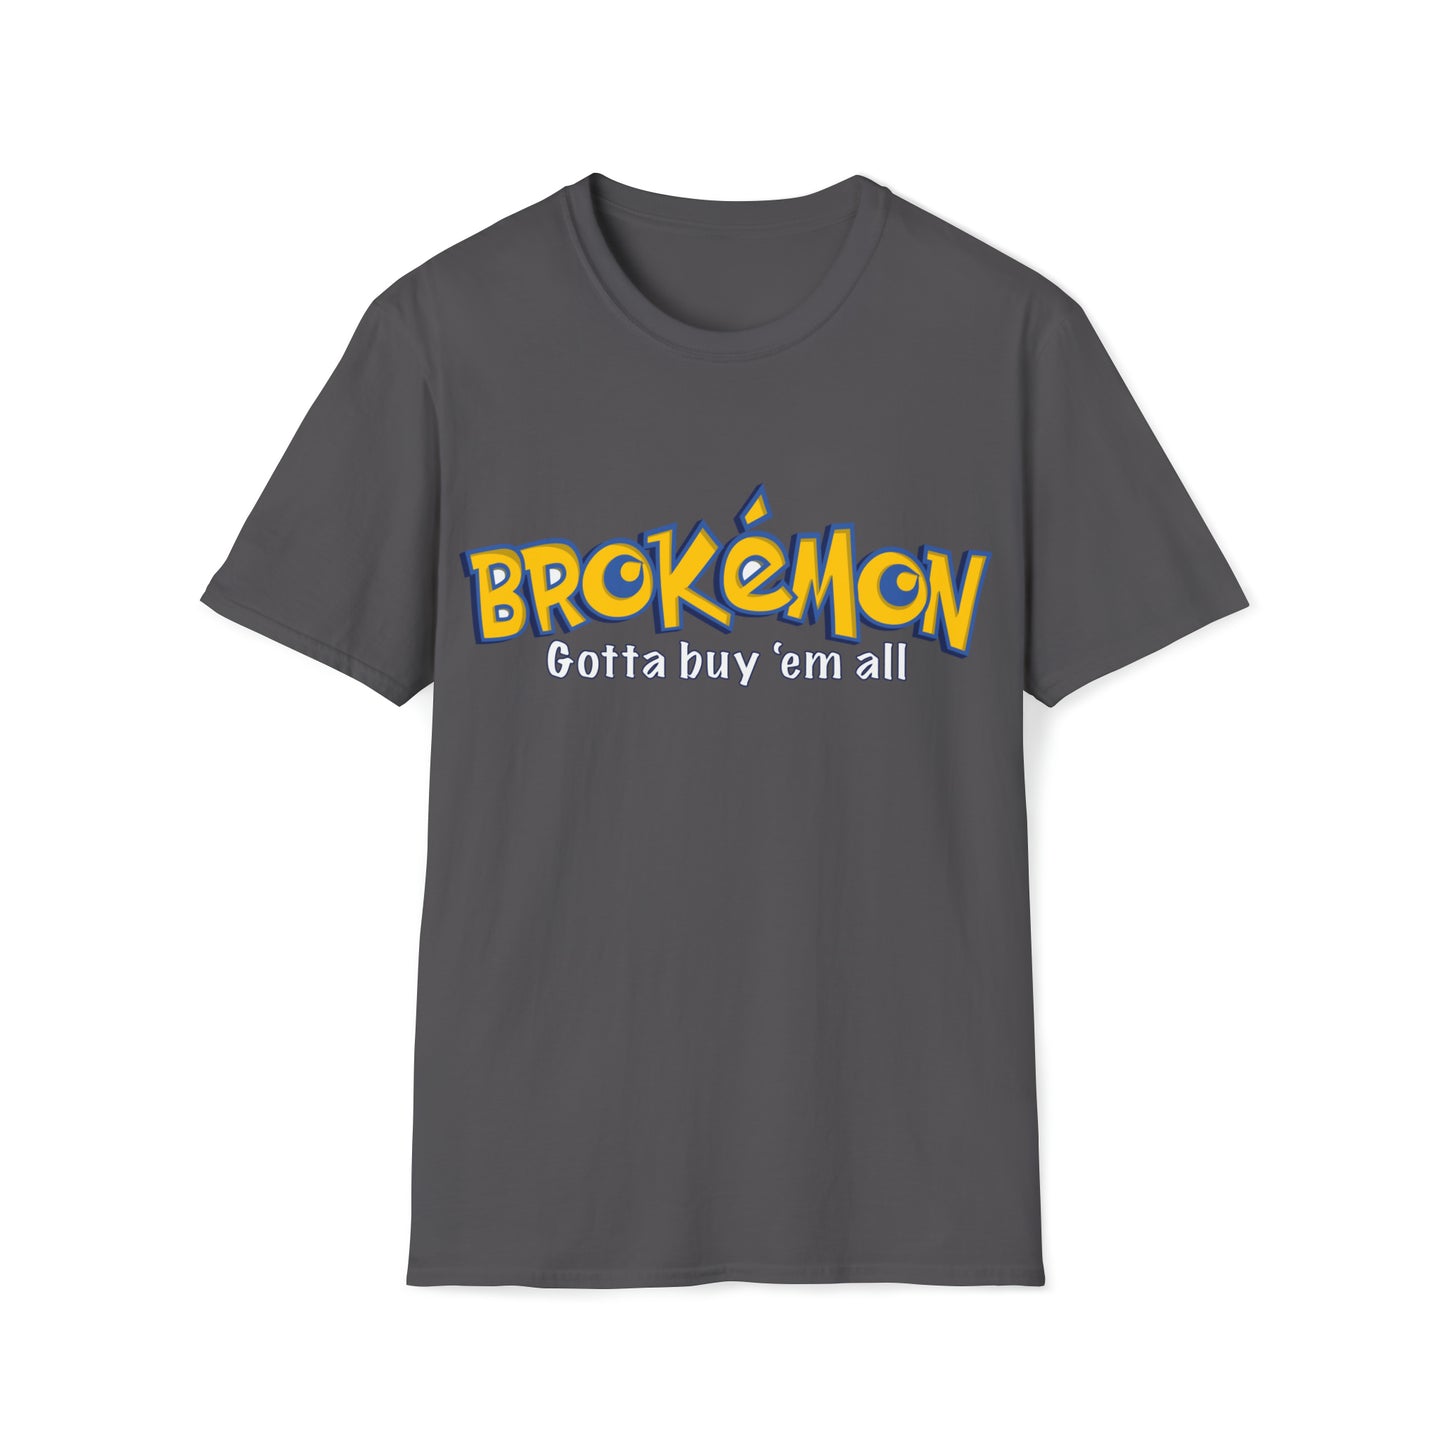 Brokemon - Tshirt USA